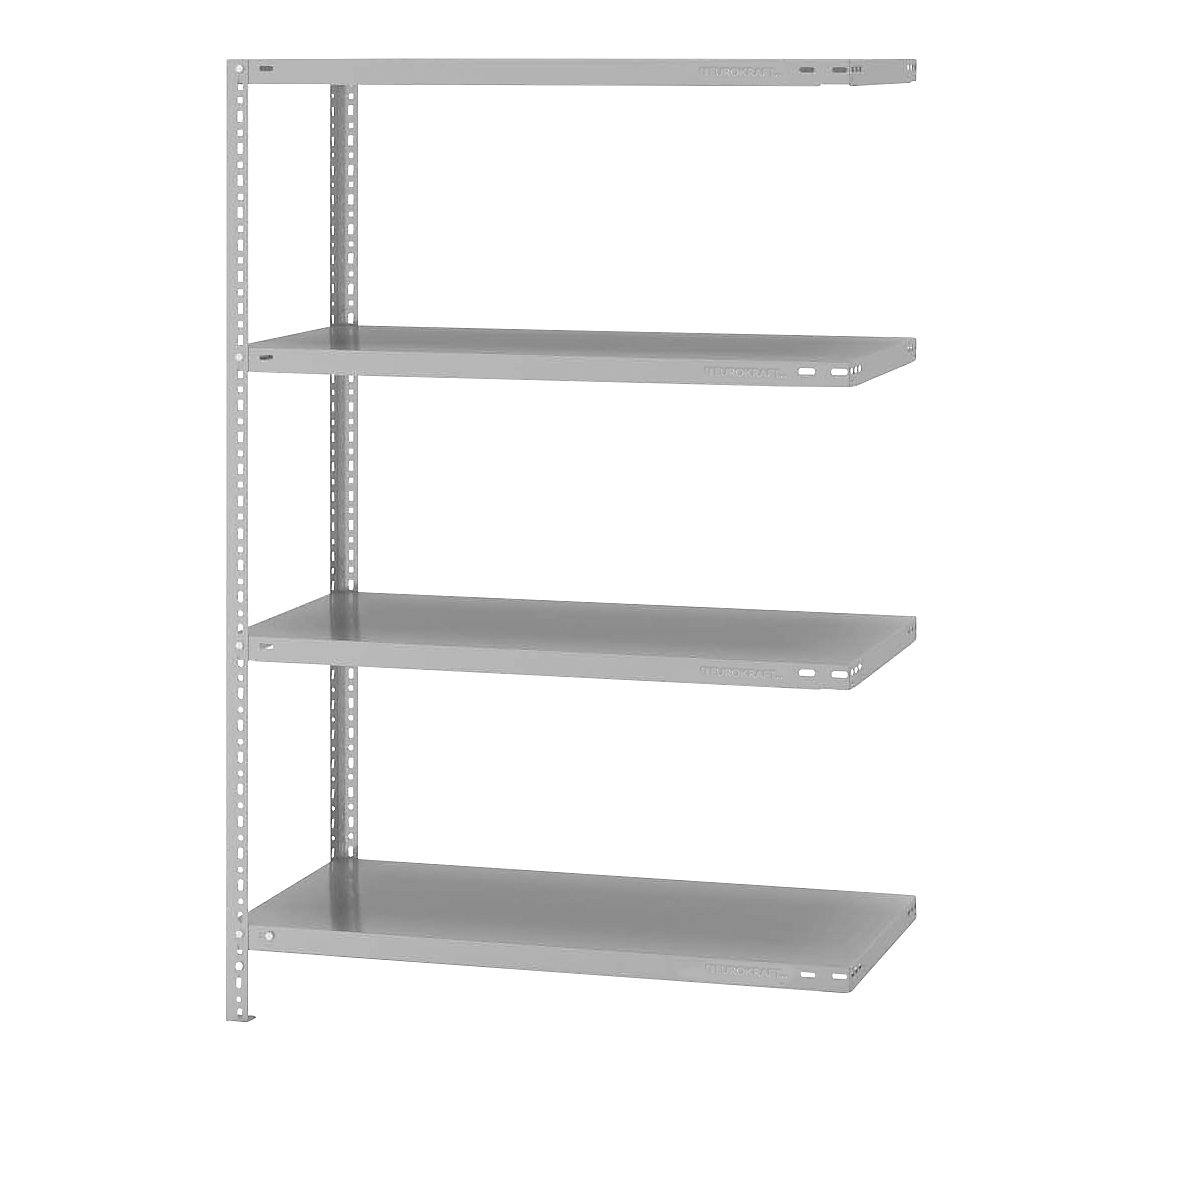 Bolt-together shelf unit, light duty, plastic coated – eurokraft pro, shelf unit height 1500 mm, shelf width 1000 mm, depth 500 mm, extension shelf unit-10